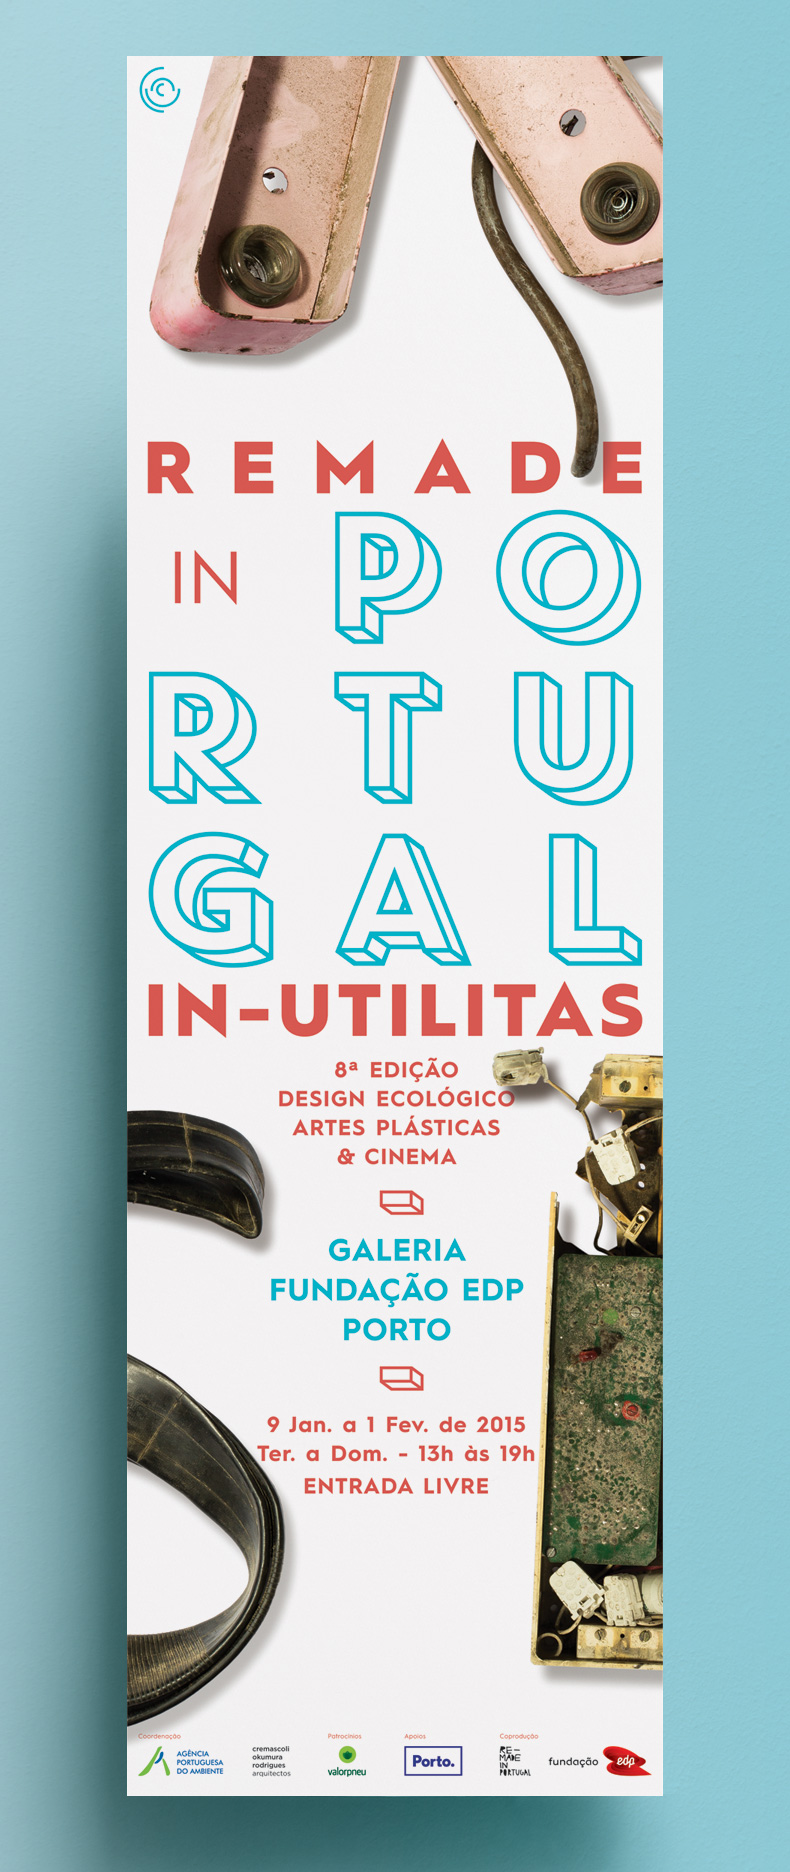 paulo-patricio-remade-in-portugal-in-utilitas-2015-05